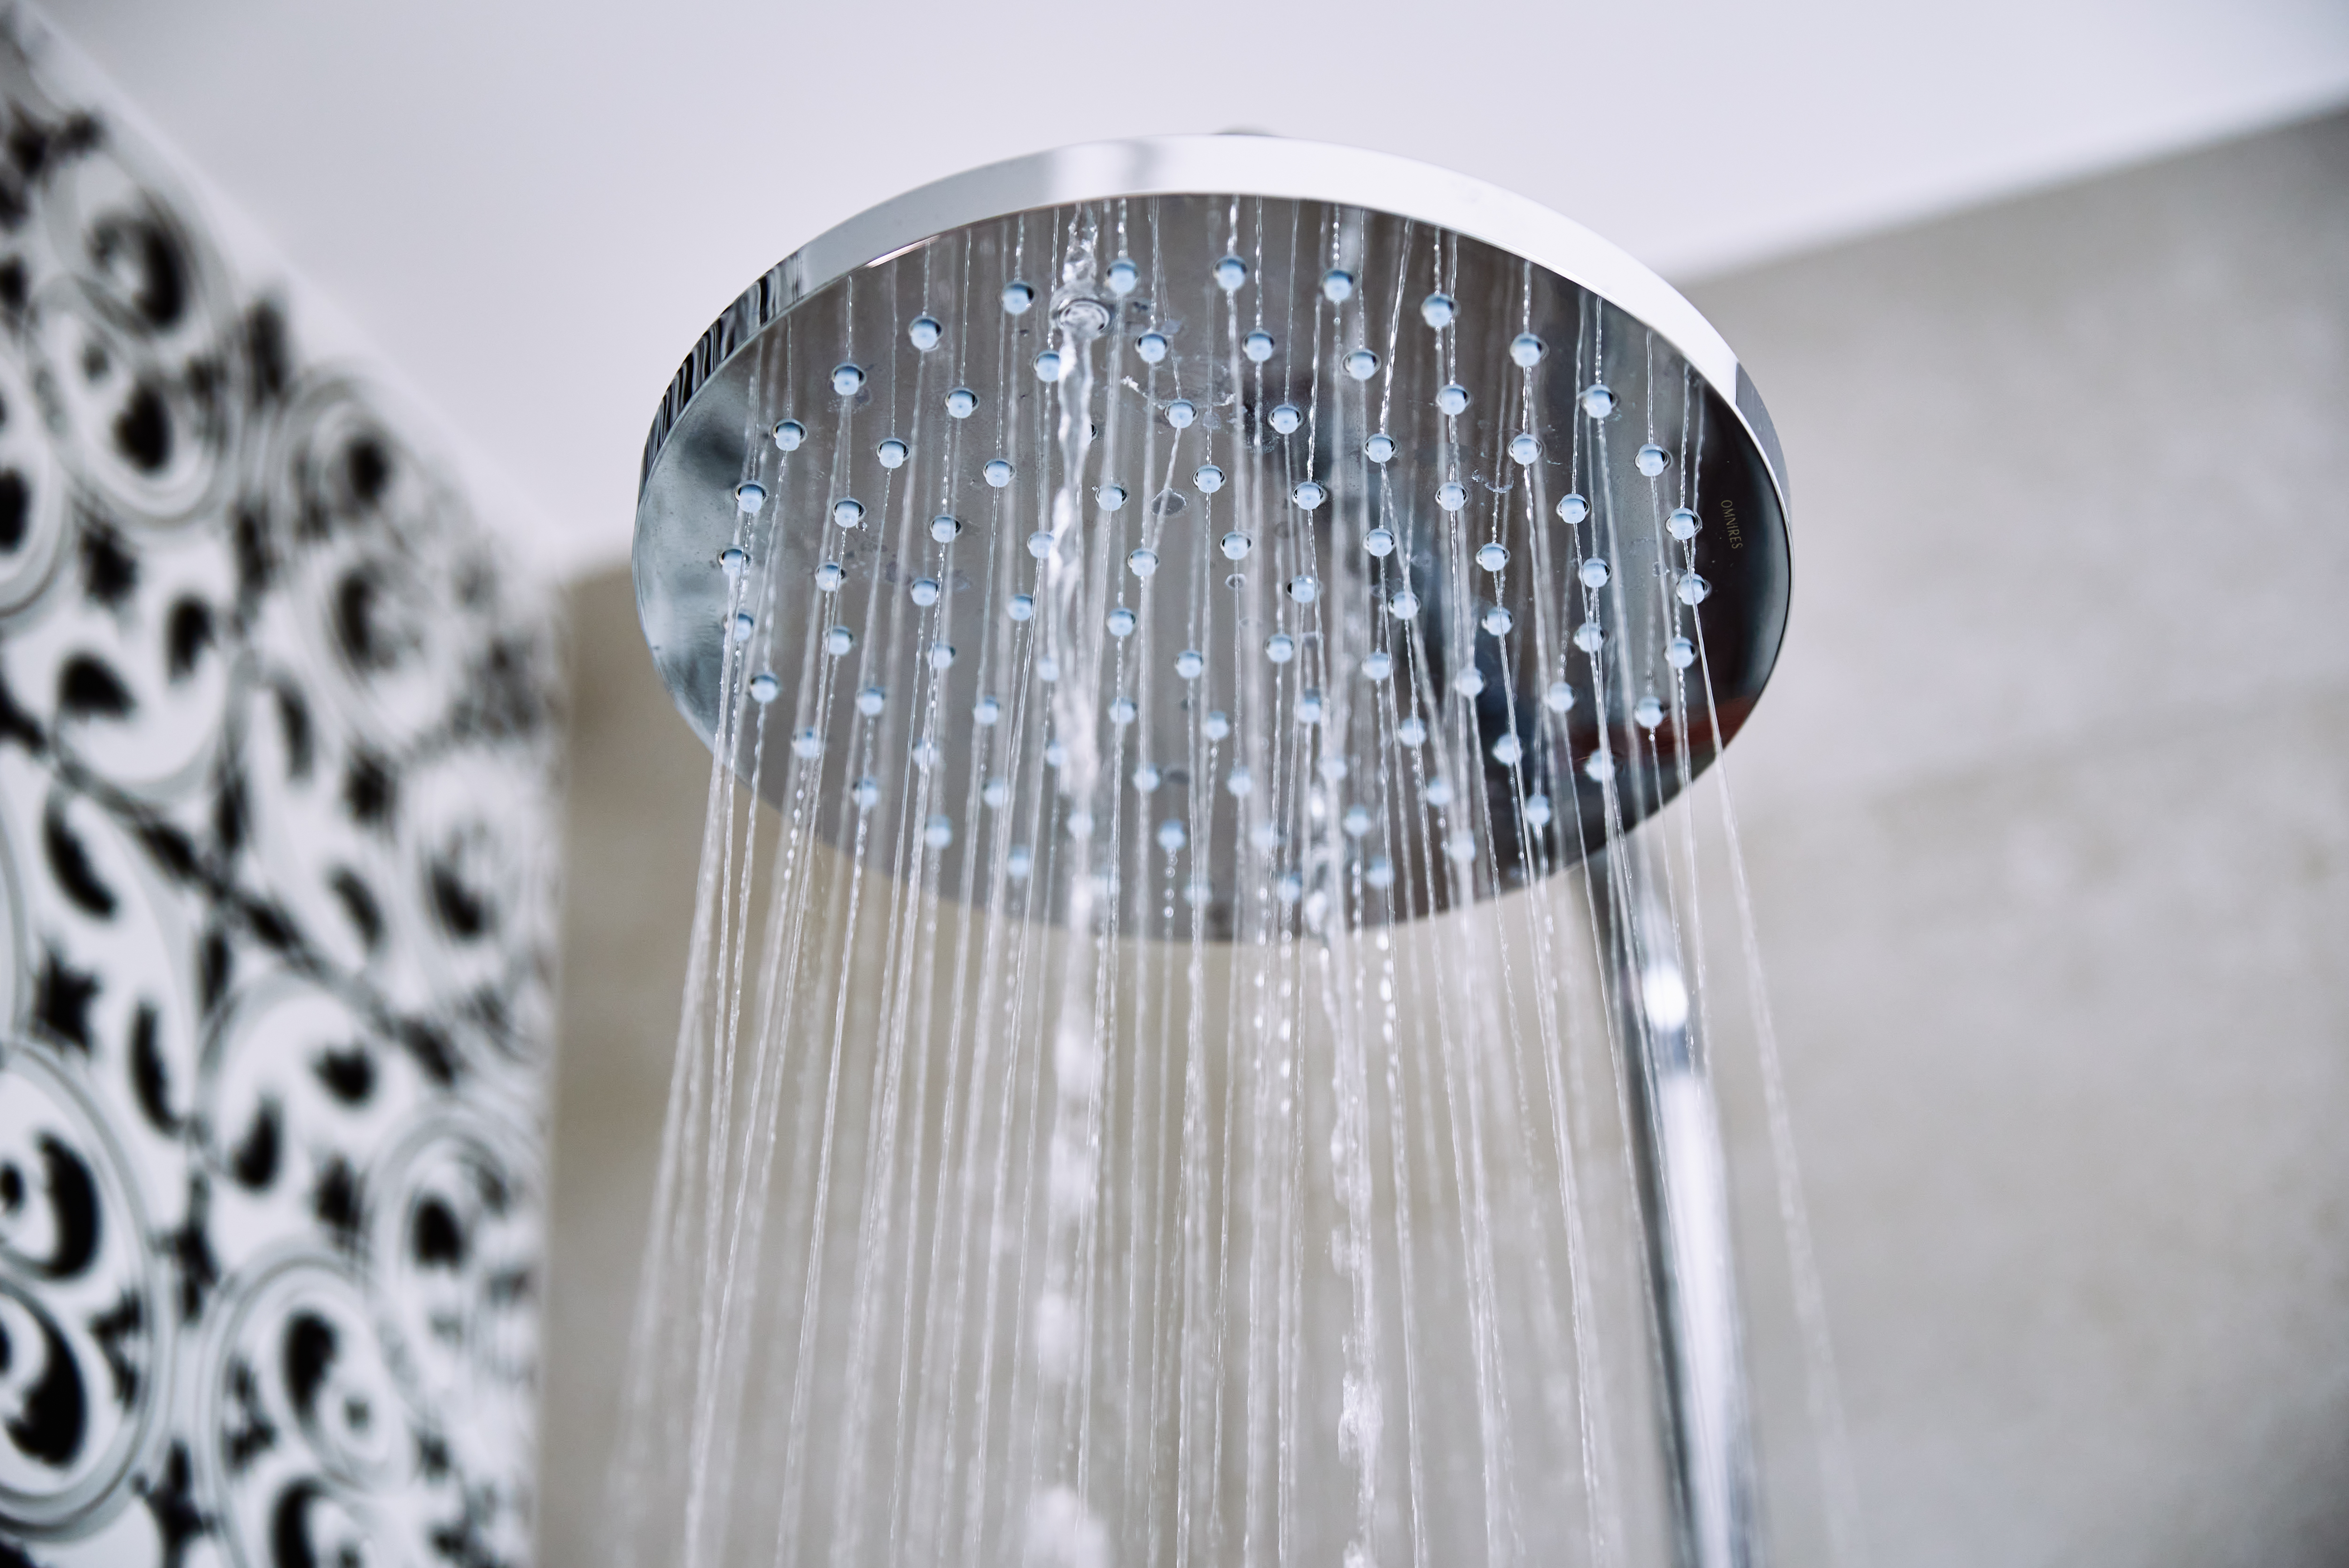 Water flowing shower head